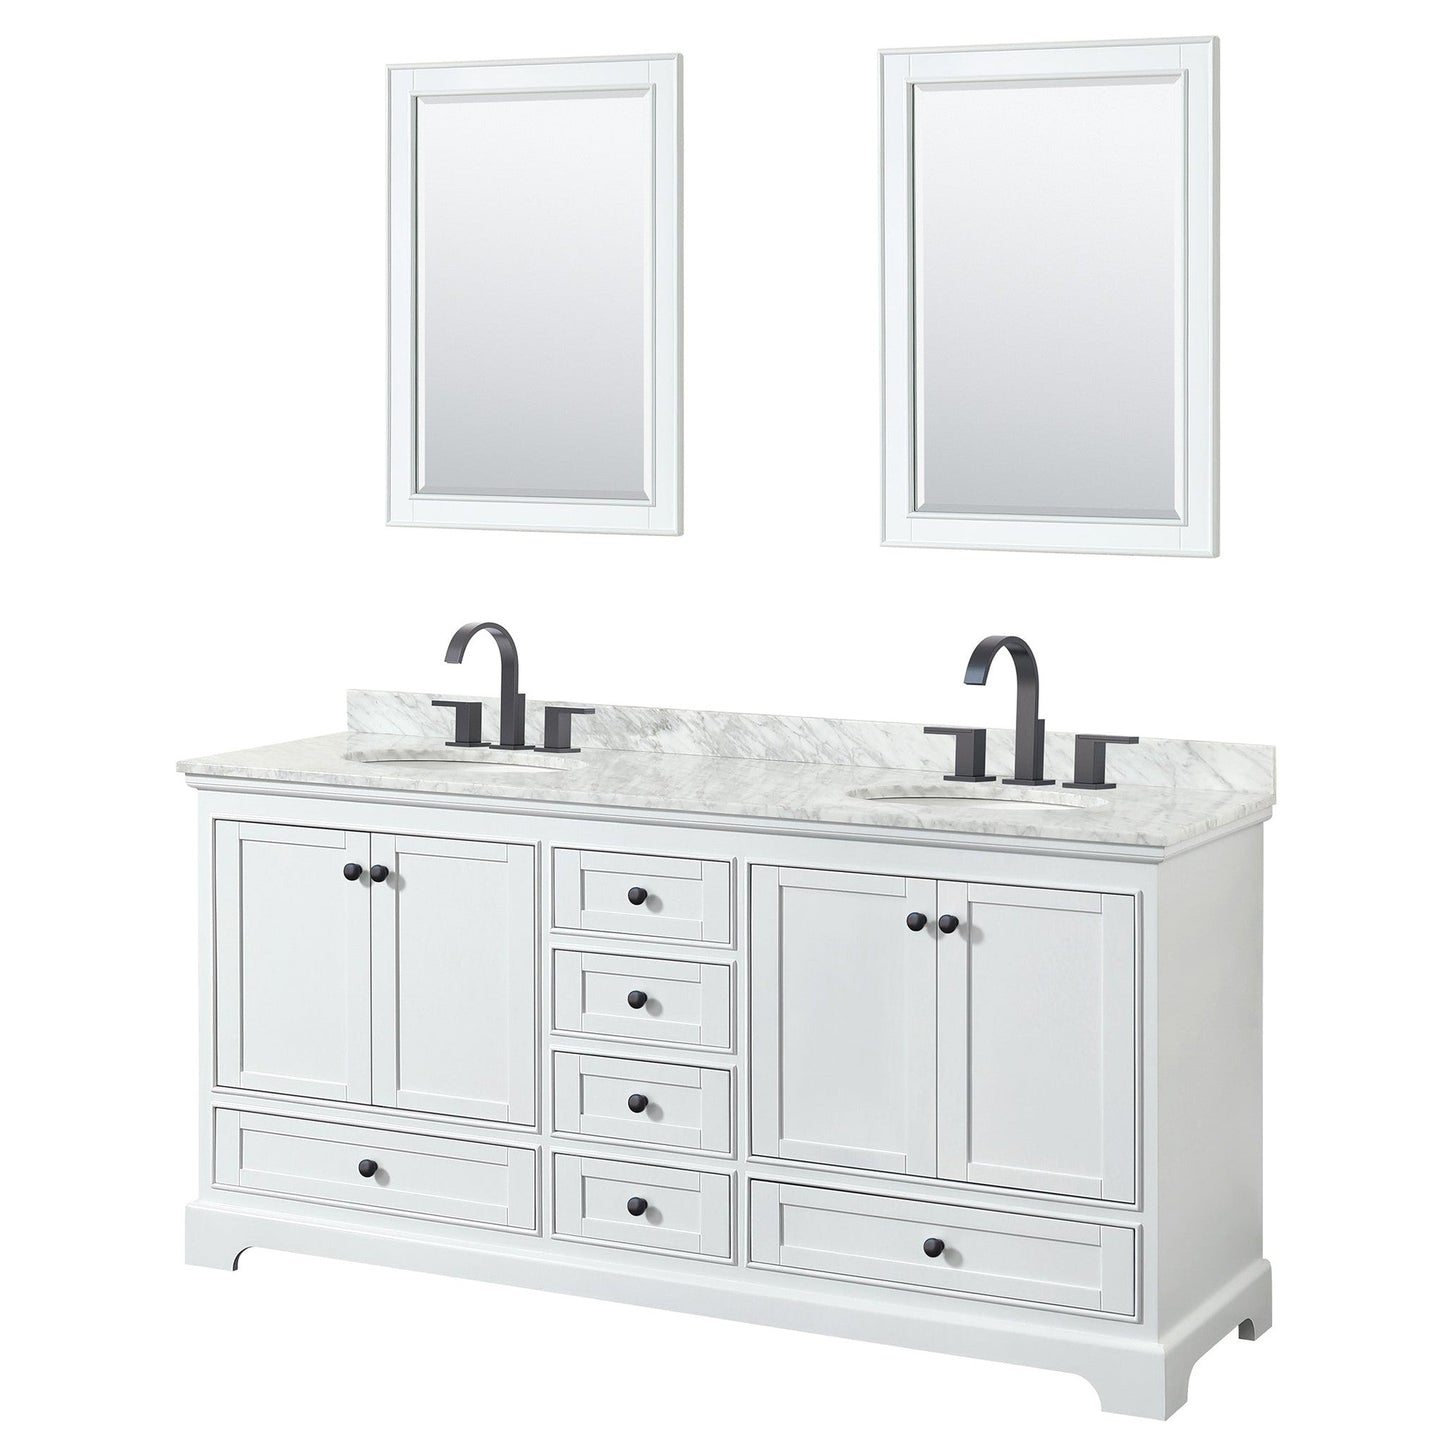 Deborah 72" Double Bathroom Vanity in White, White Carrara Marble Countertop, Undermount Oval Sinks, Matte Black Trim, 24" Mirrors